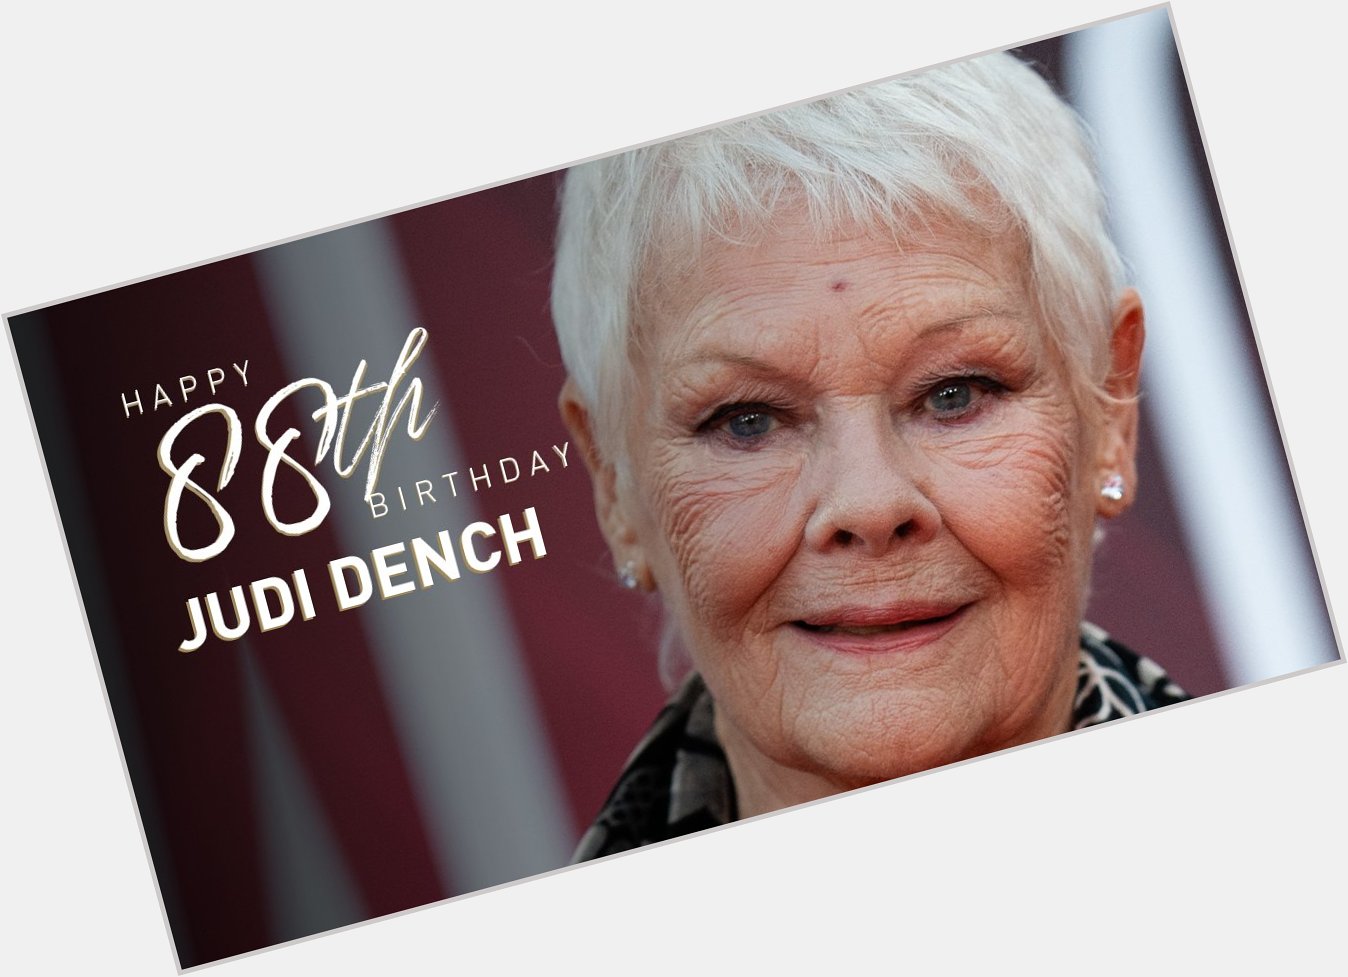 Happy birthday Judi Dench!

Read her bio here:  